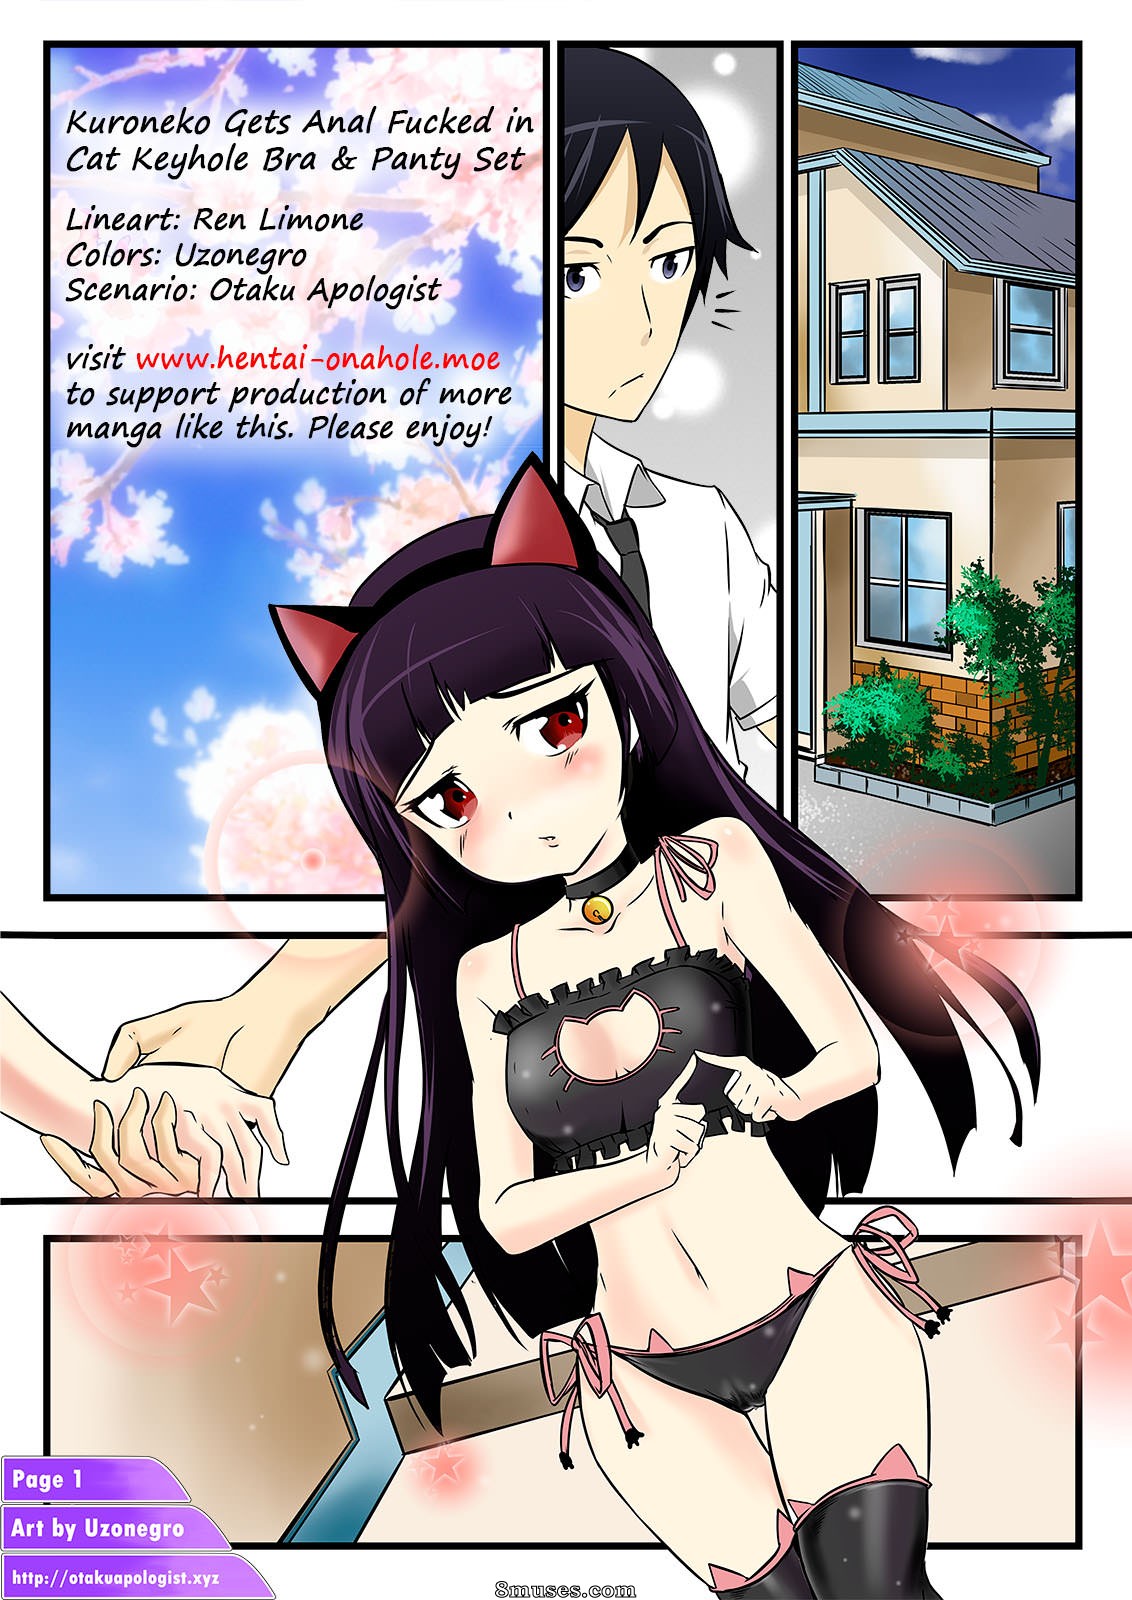 Hentai Cat Nude - Kuroneko Gets Anal Fucked In Cat Keyhole Bra and Panty Set - 8muses Comics  - Sex Comics and Porn Cartoons